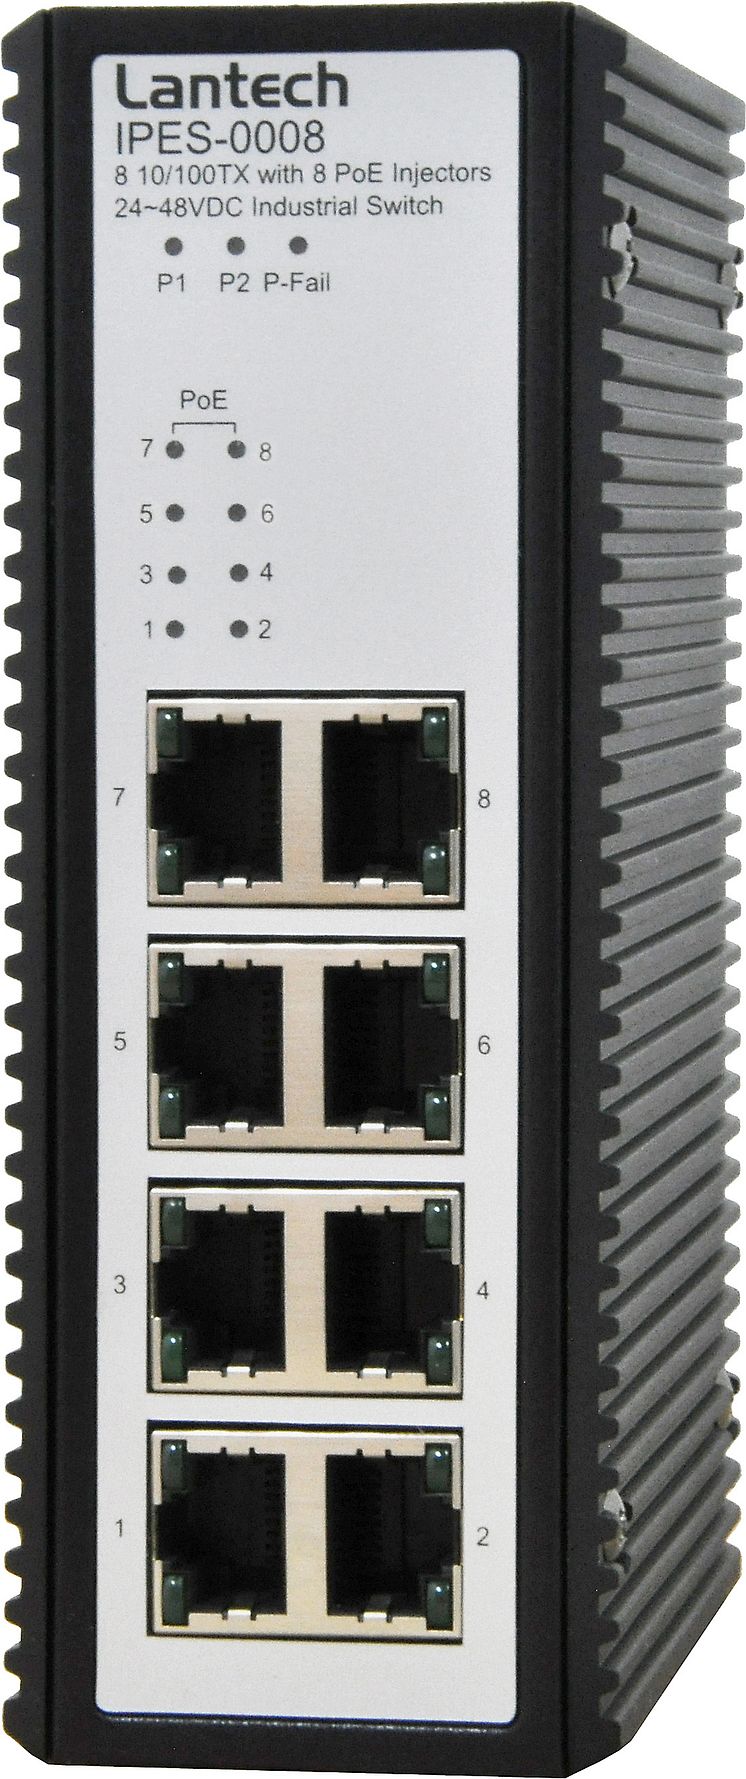 IPES-0008 switch med PoE